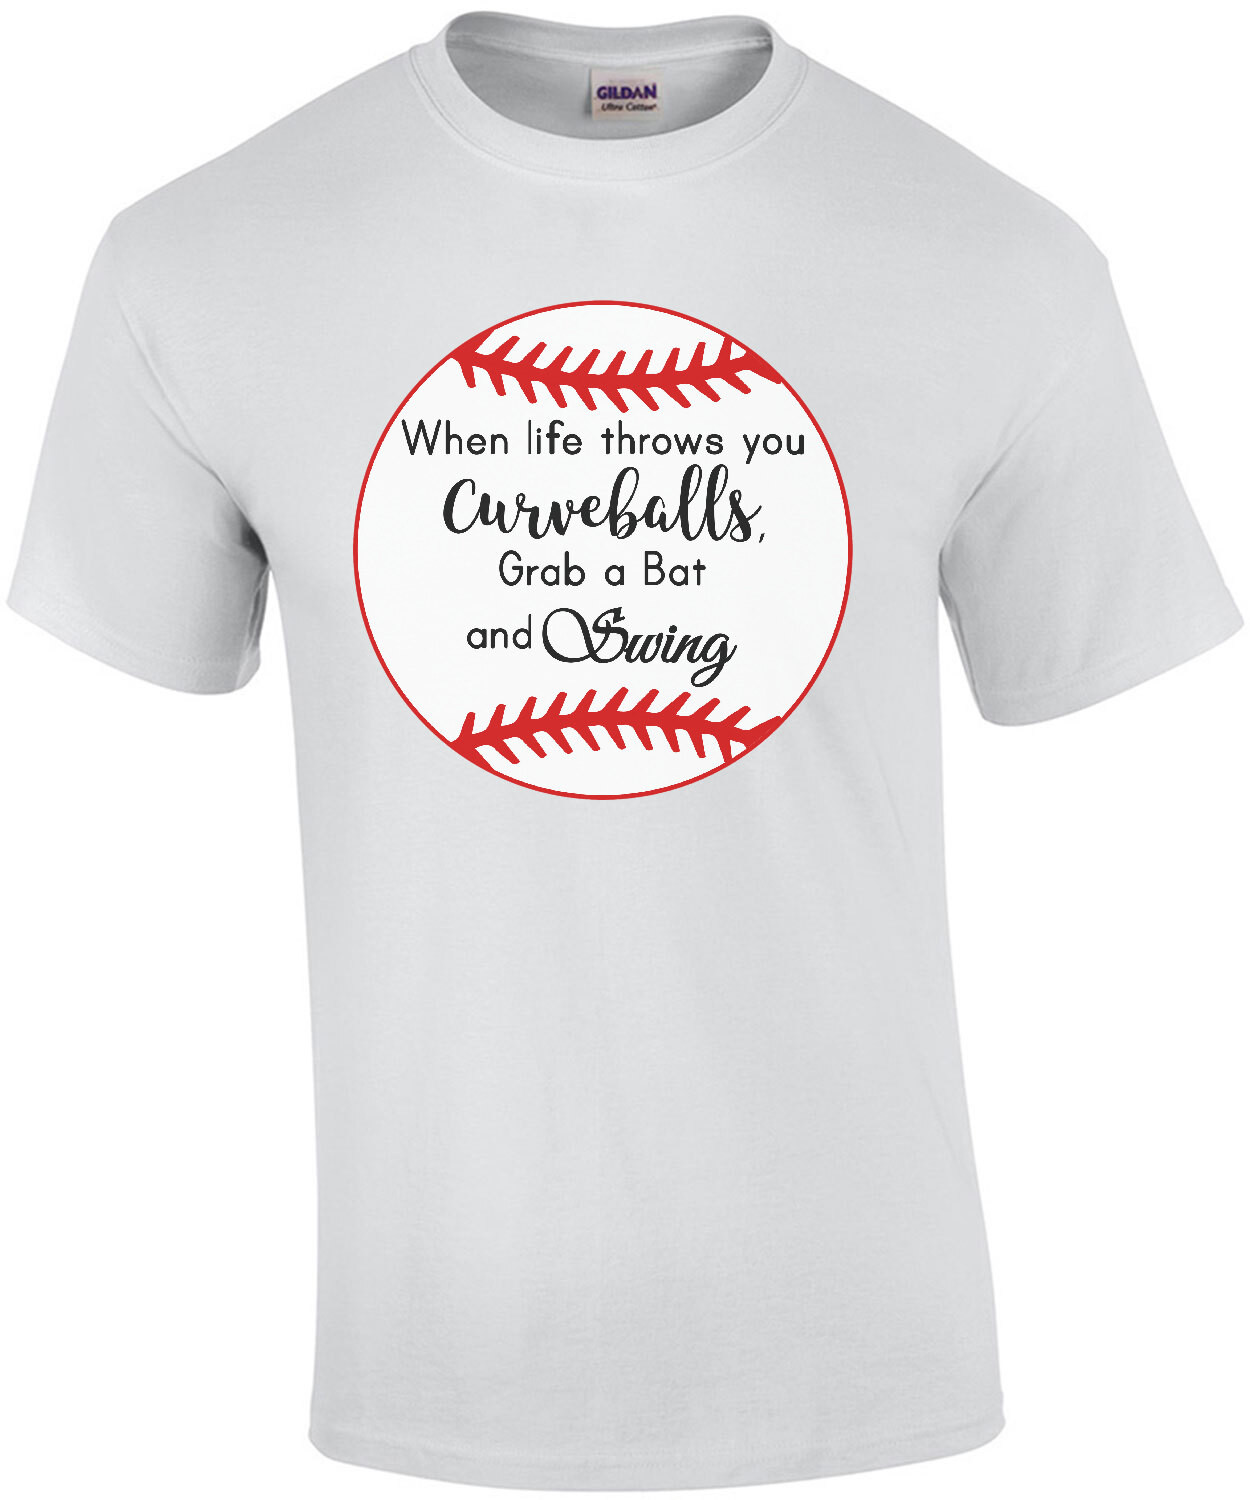 When life throws you curveballs, grab a bat and swing - cute softball t-shirt.